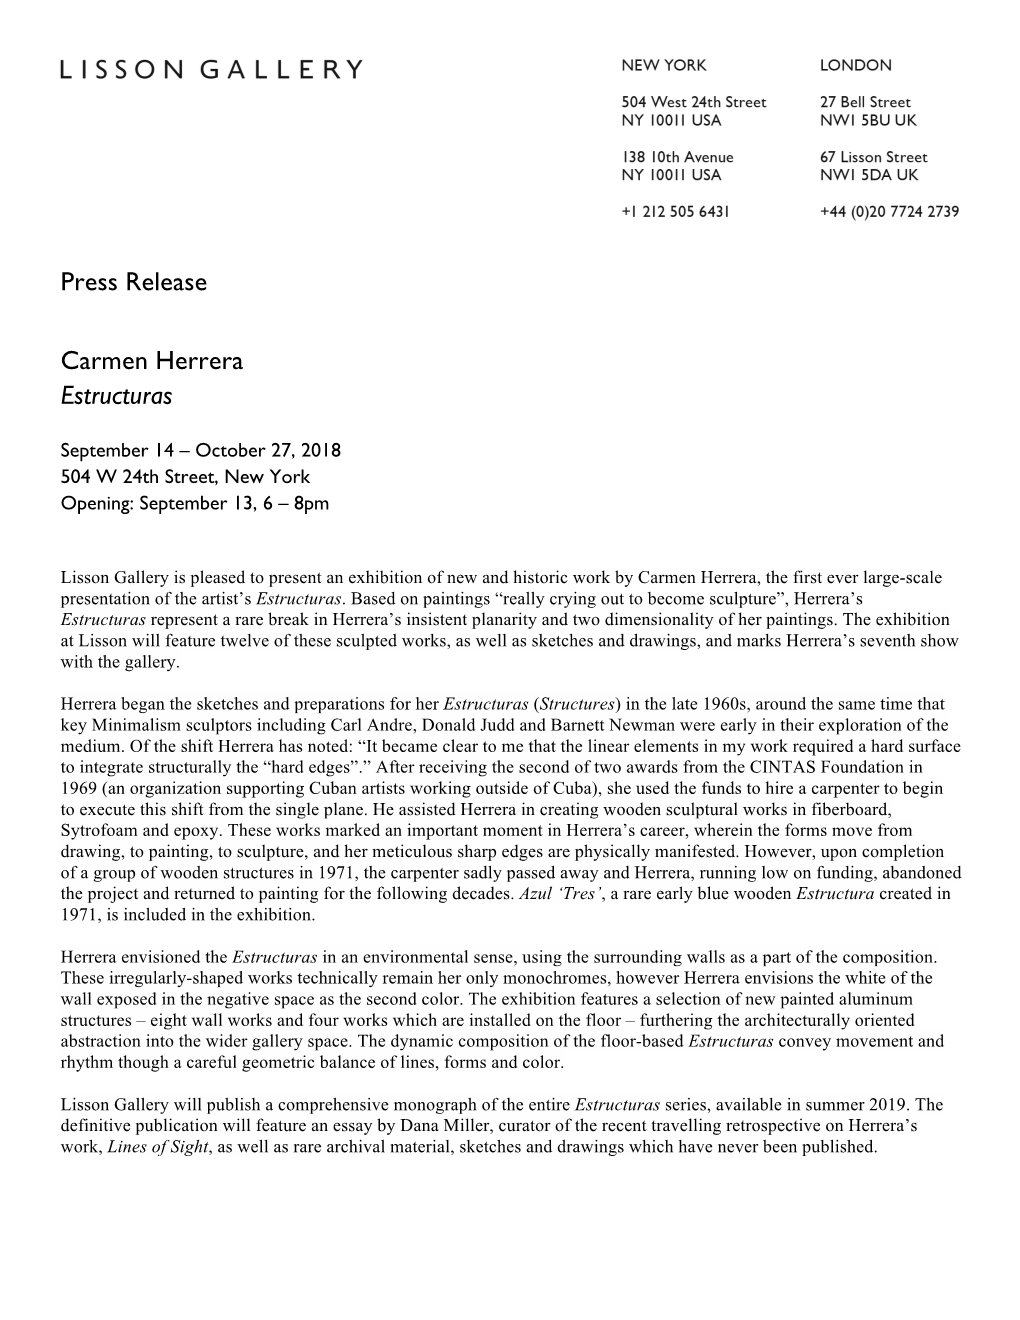 Press Release Carmen Herrera Estructuras